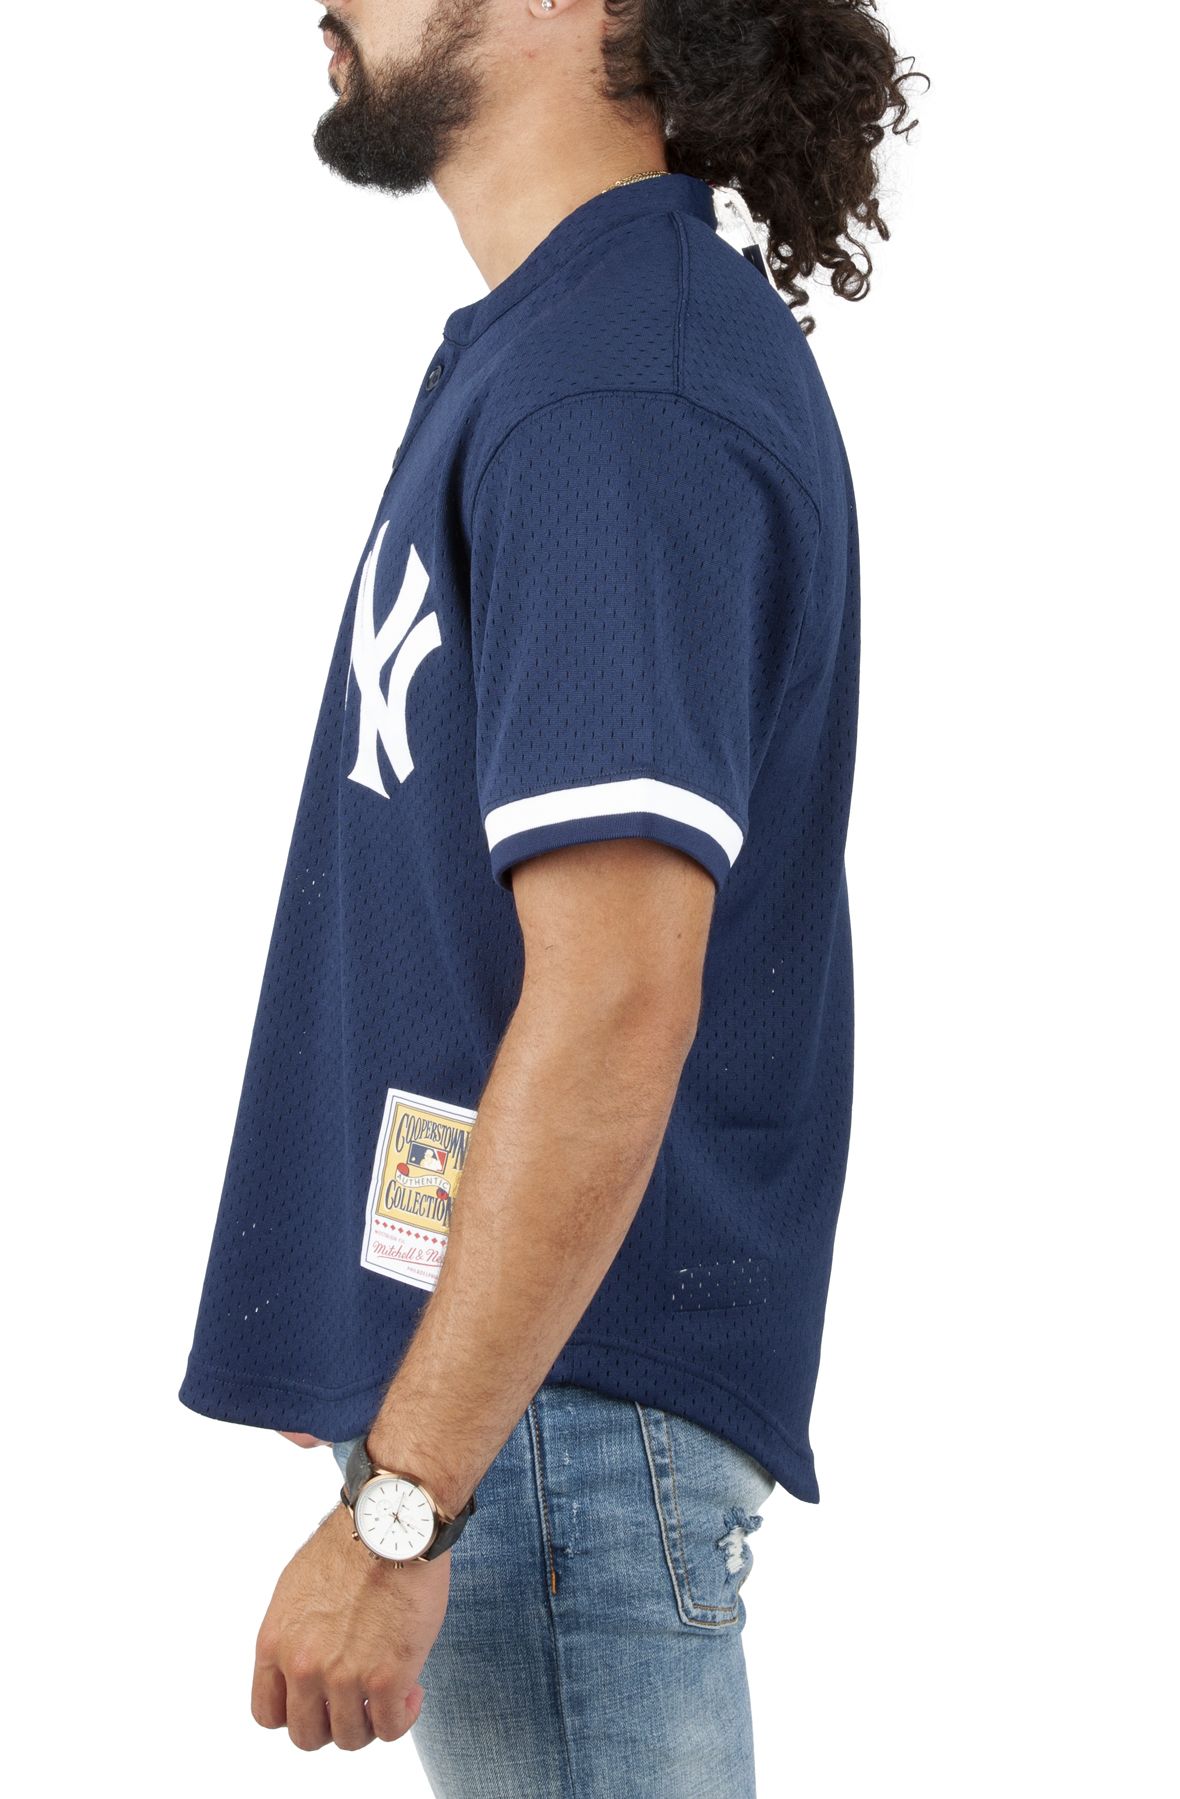 Youth Derek Jeter Cooperstown New York Yankees BP Jersey